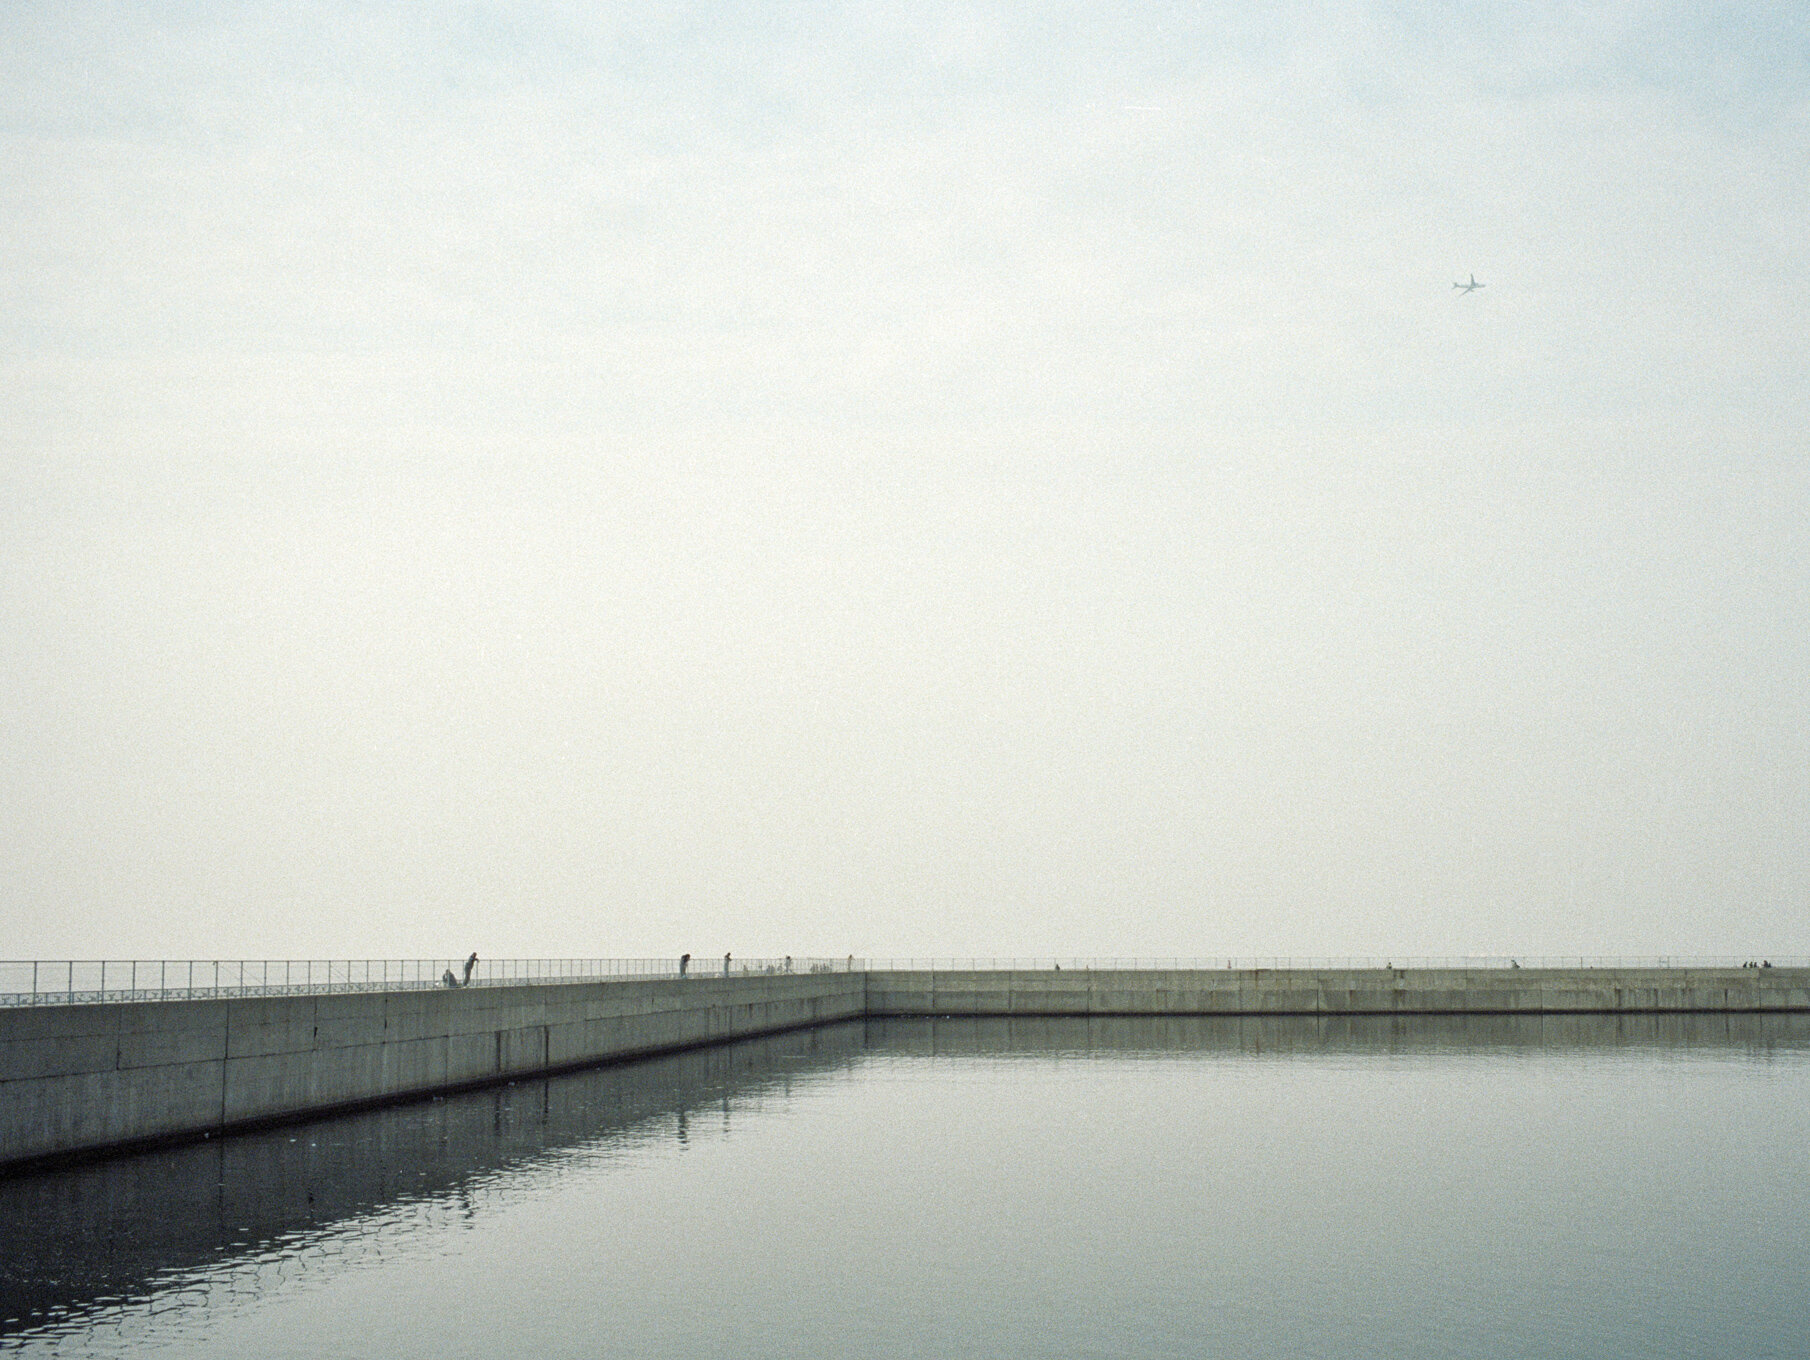   Breakwater,  Izumisanno, 2010  